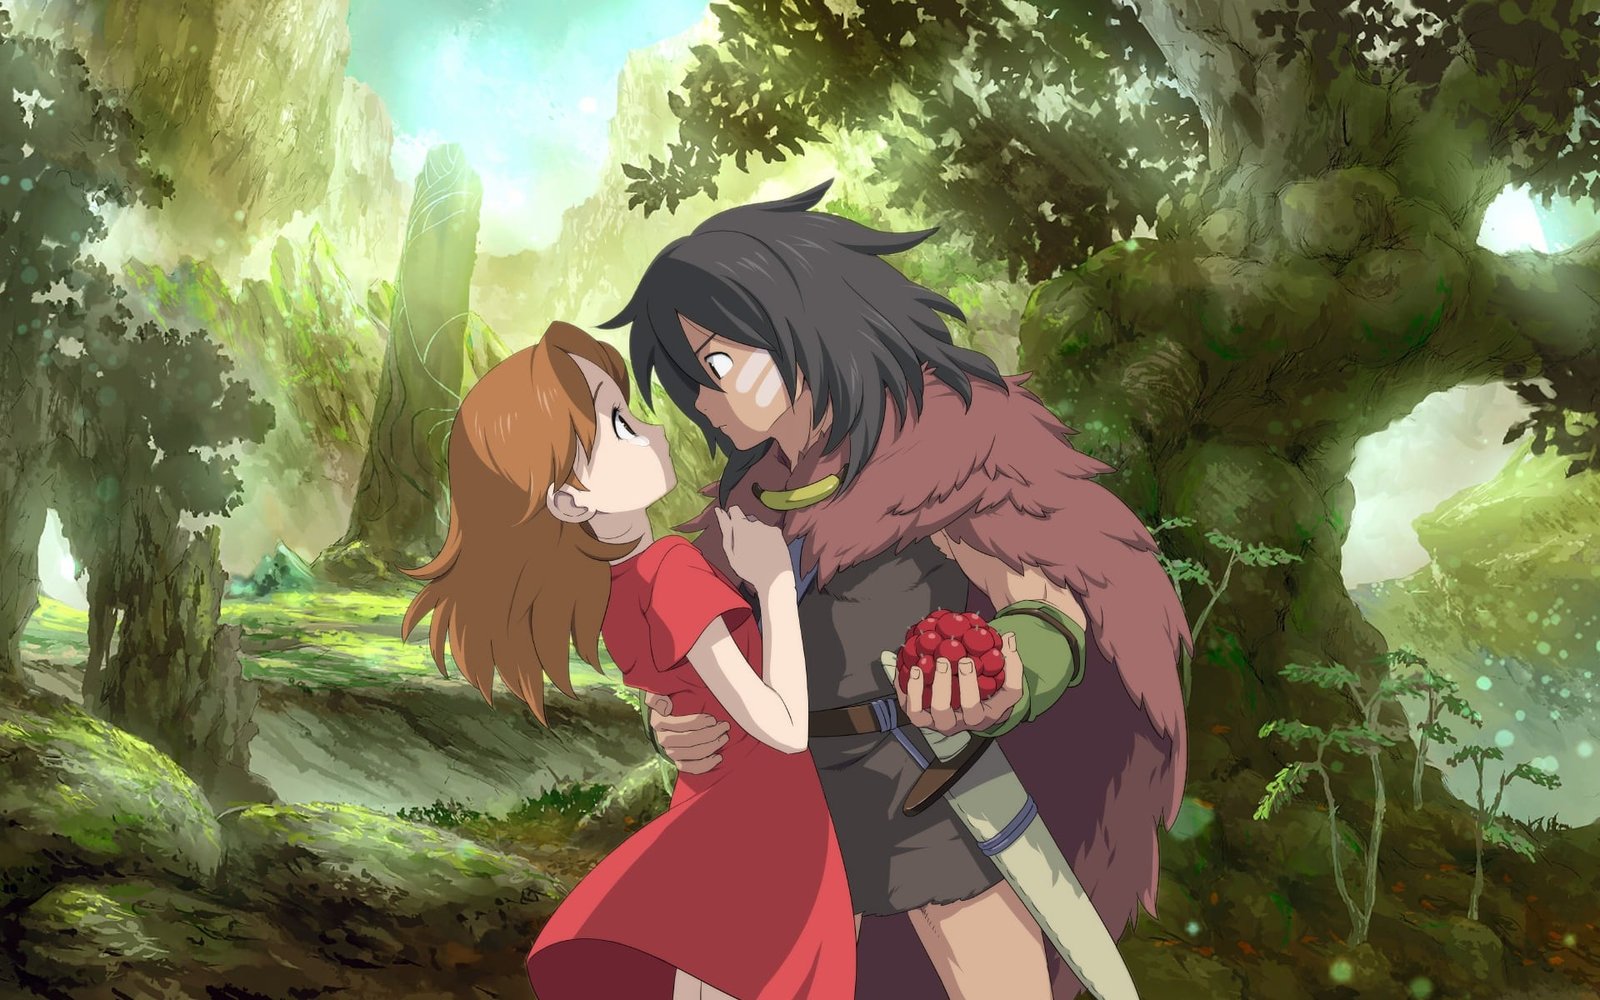 Studio Ghibli Movies Ranked - The Secret World of Arrietty